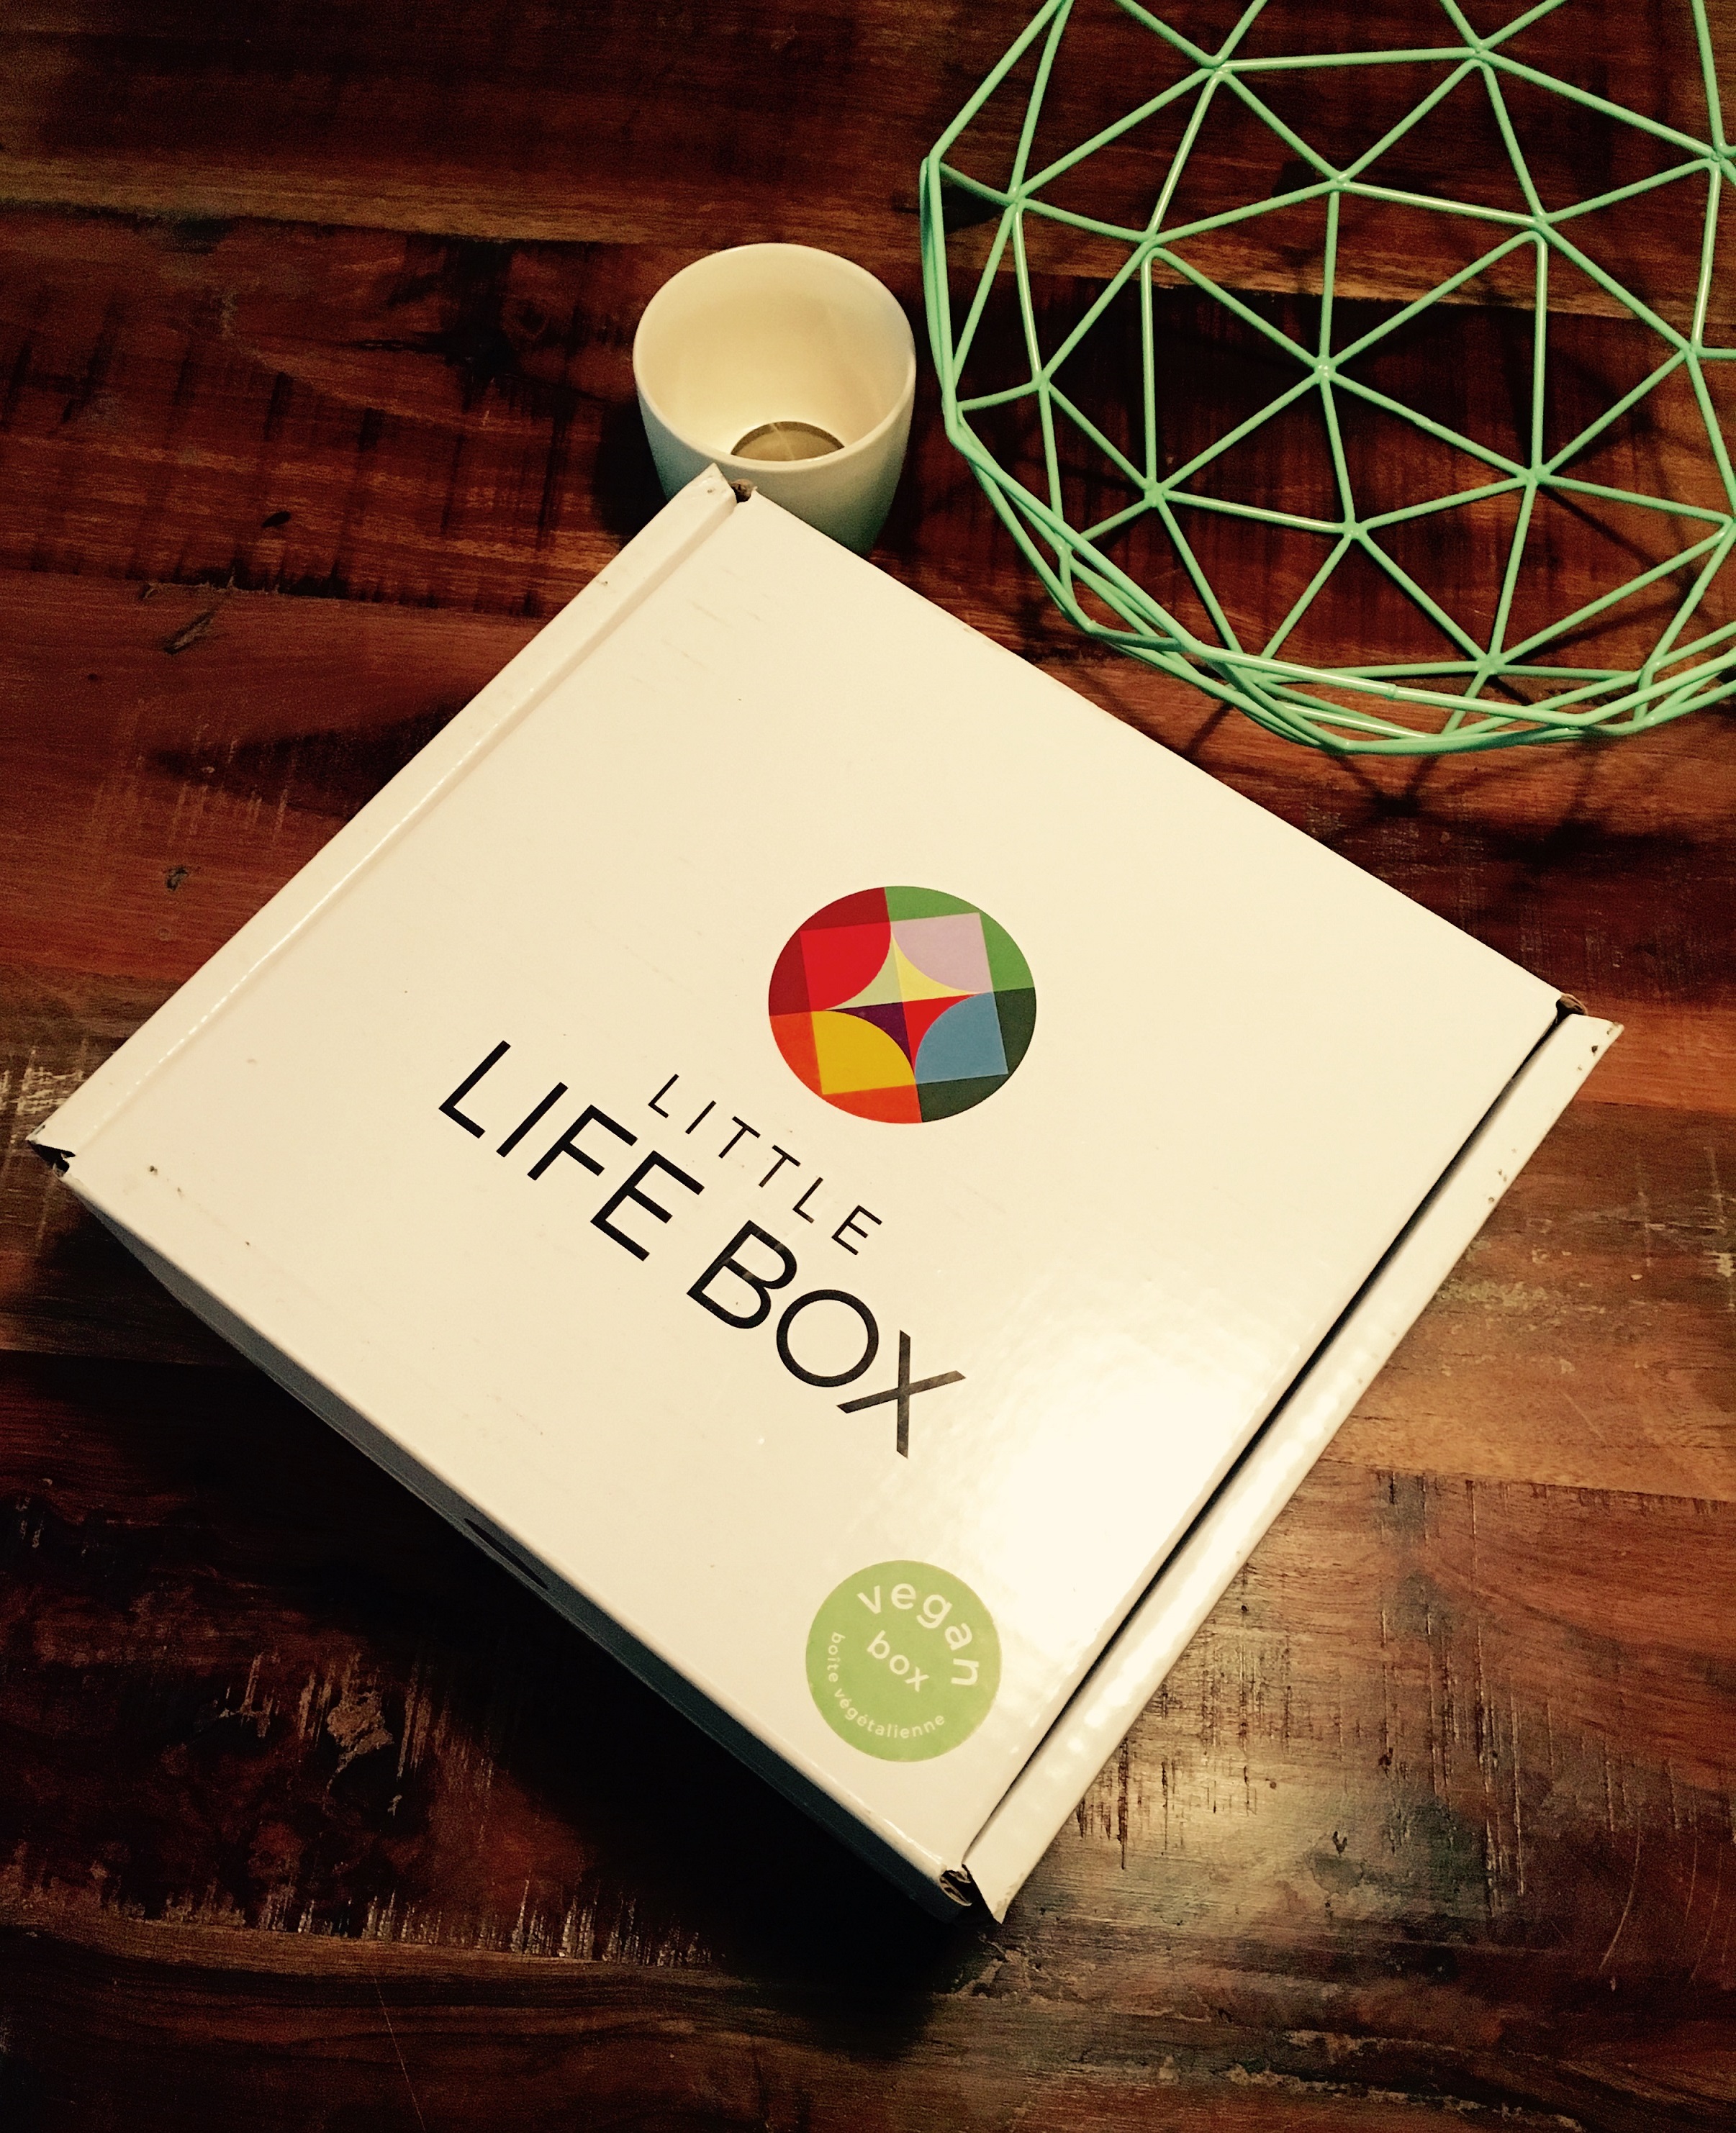 Little Life Box